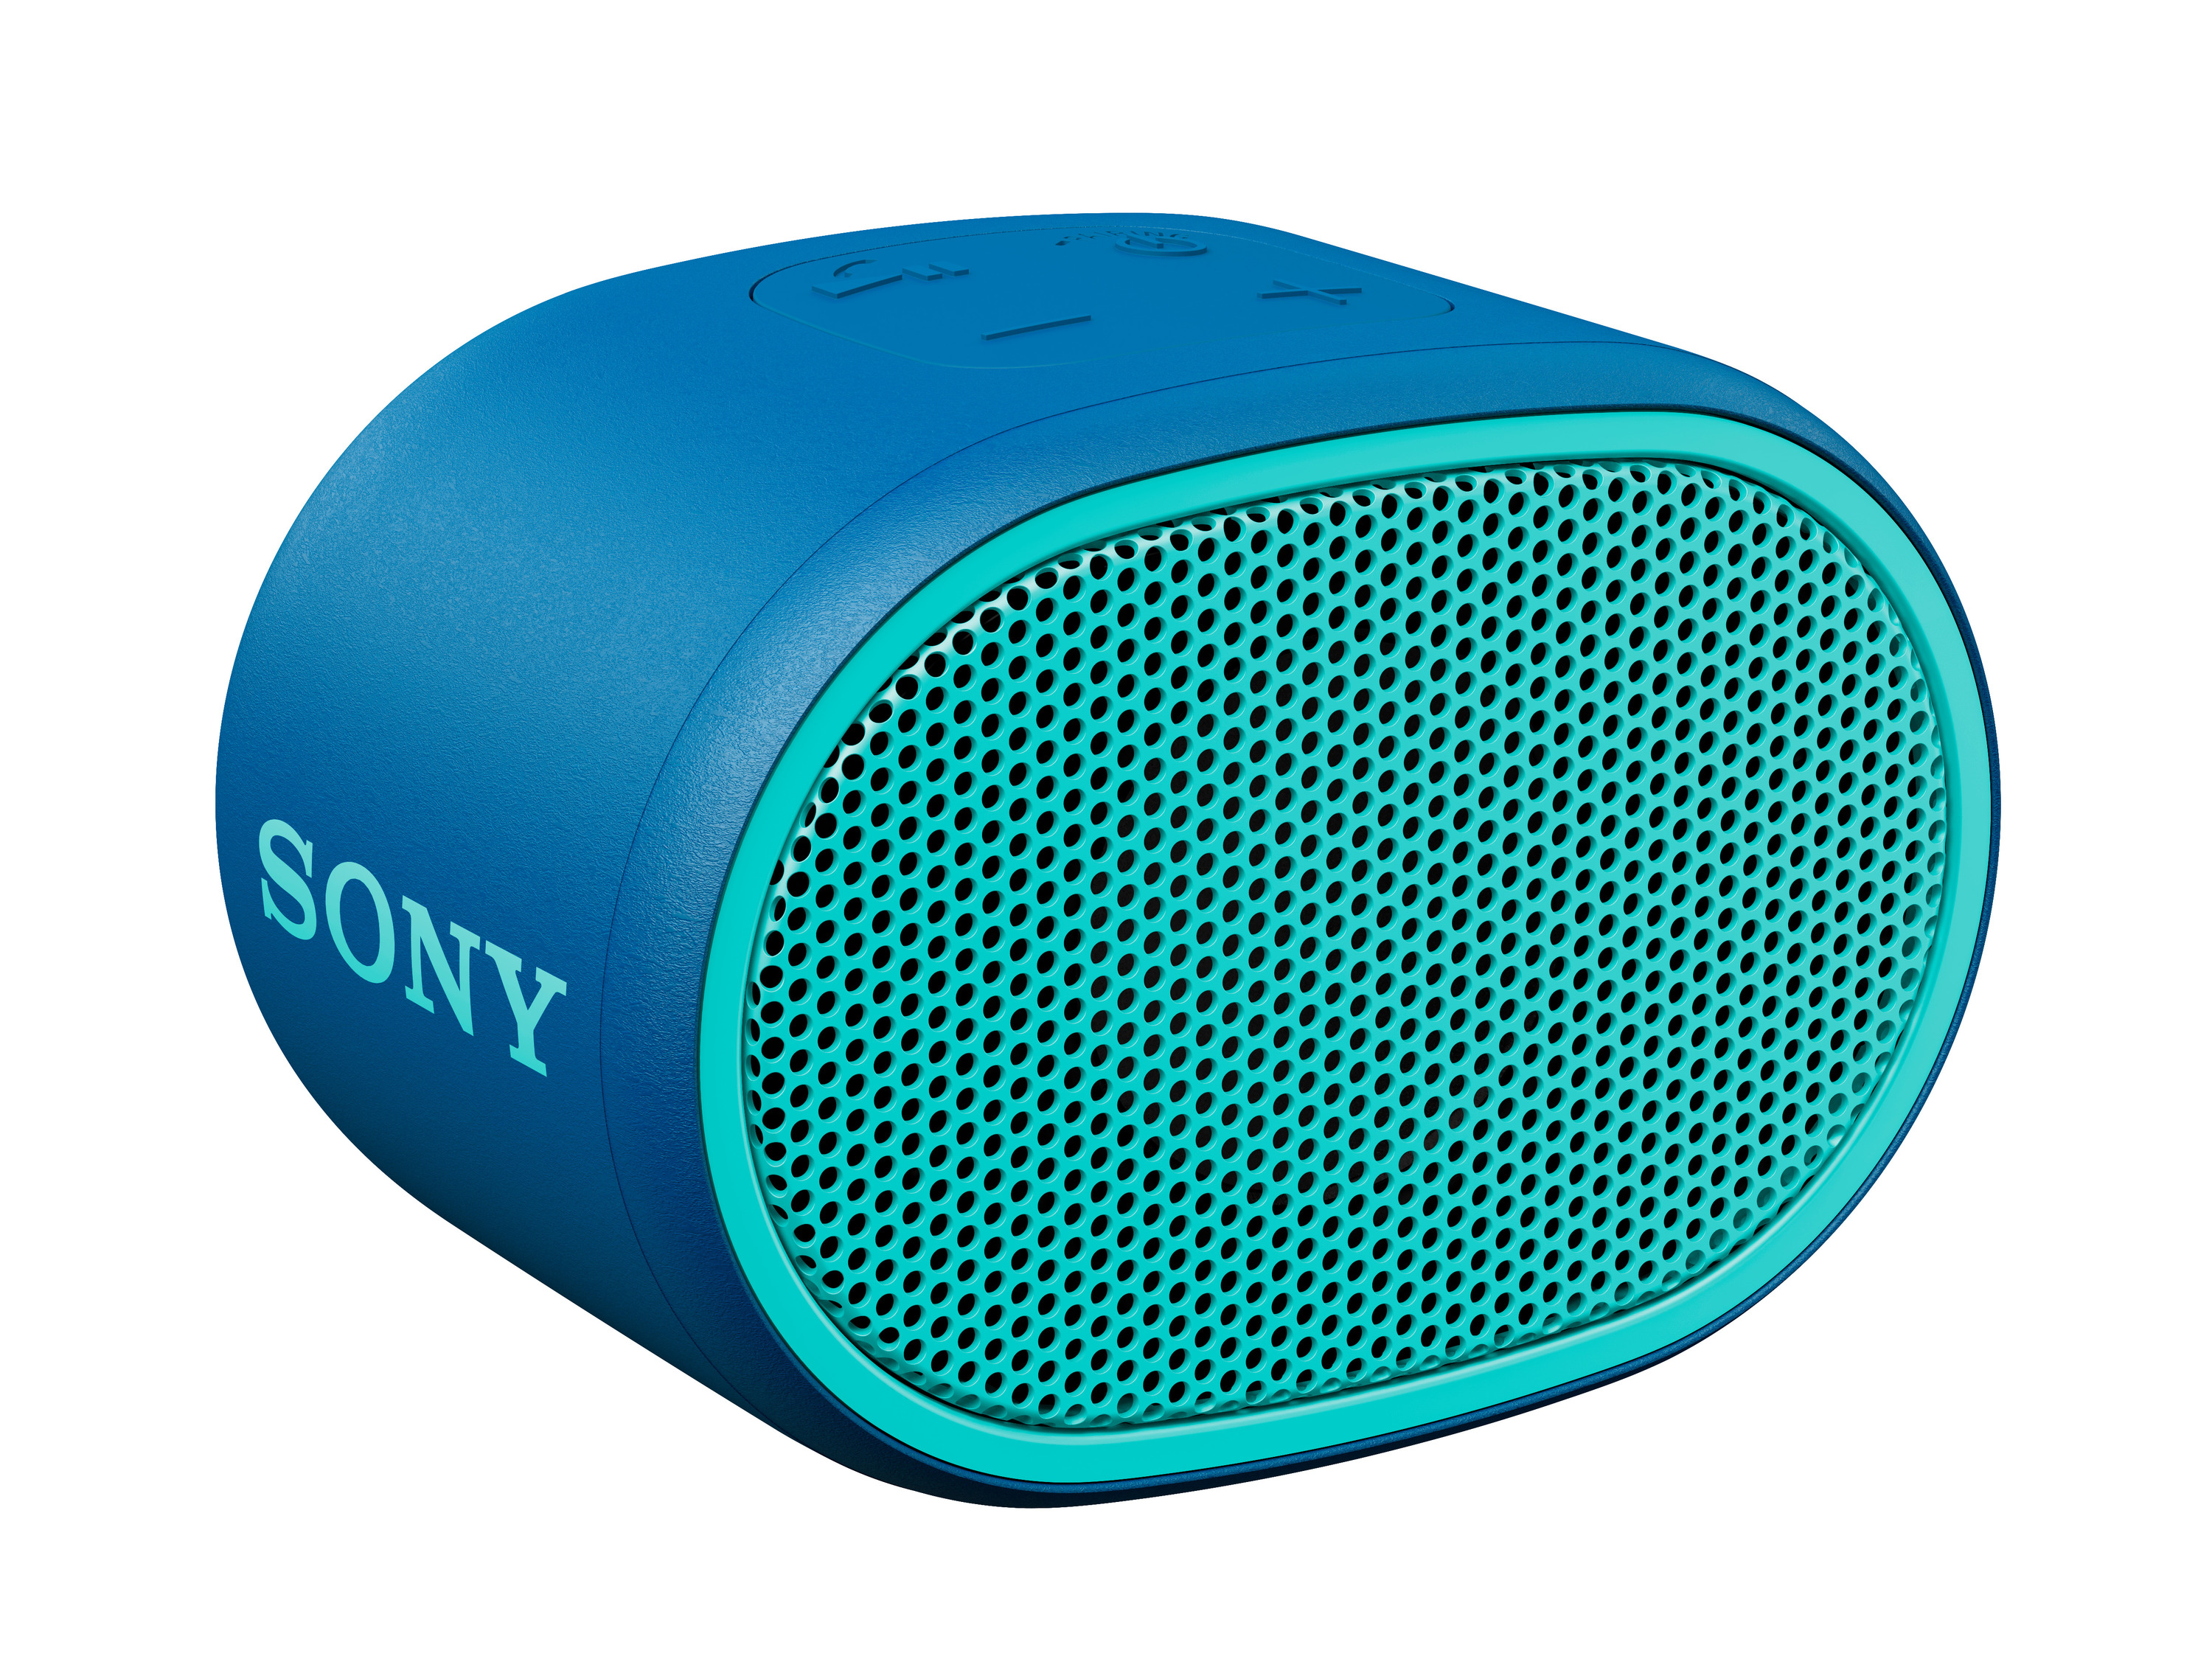 Sony Portable Bluetooth Speaker, Blue, SRSXB01/LMC4 - image 1 of 7